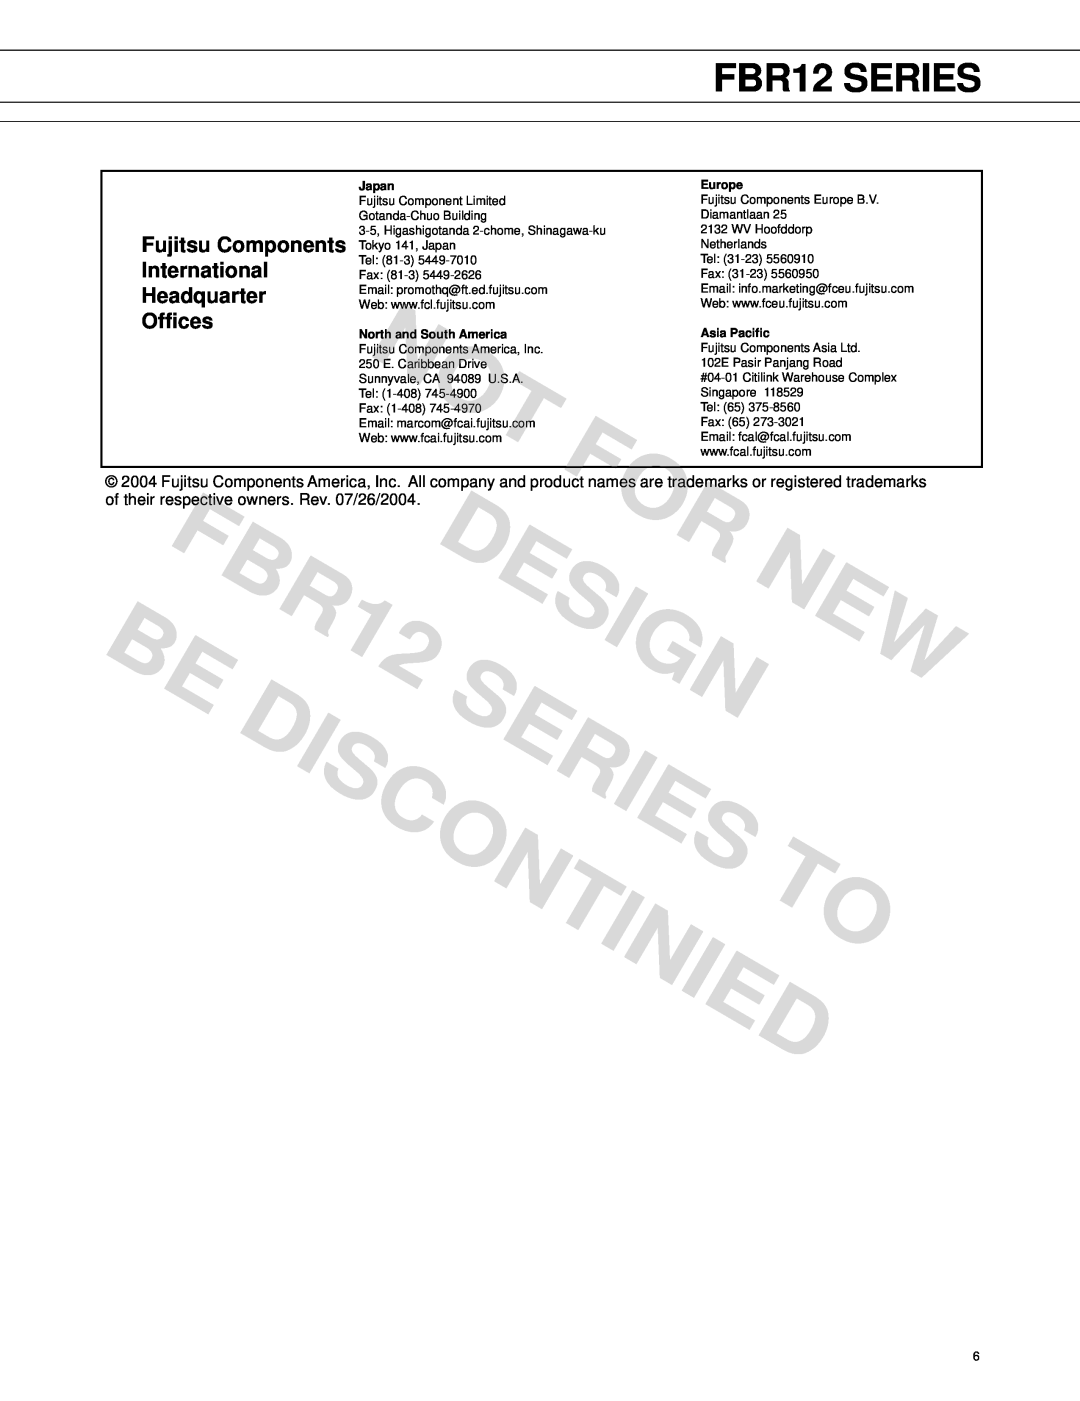 Fujitsu manual Series, Fujitsu Components, International, Headquarter, Offices, Design, Discontinied, FBR12 SERIES 